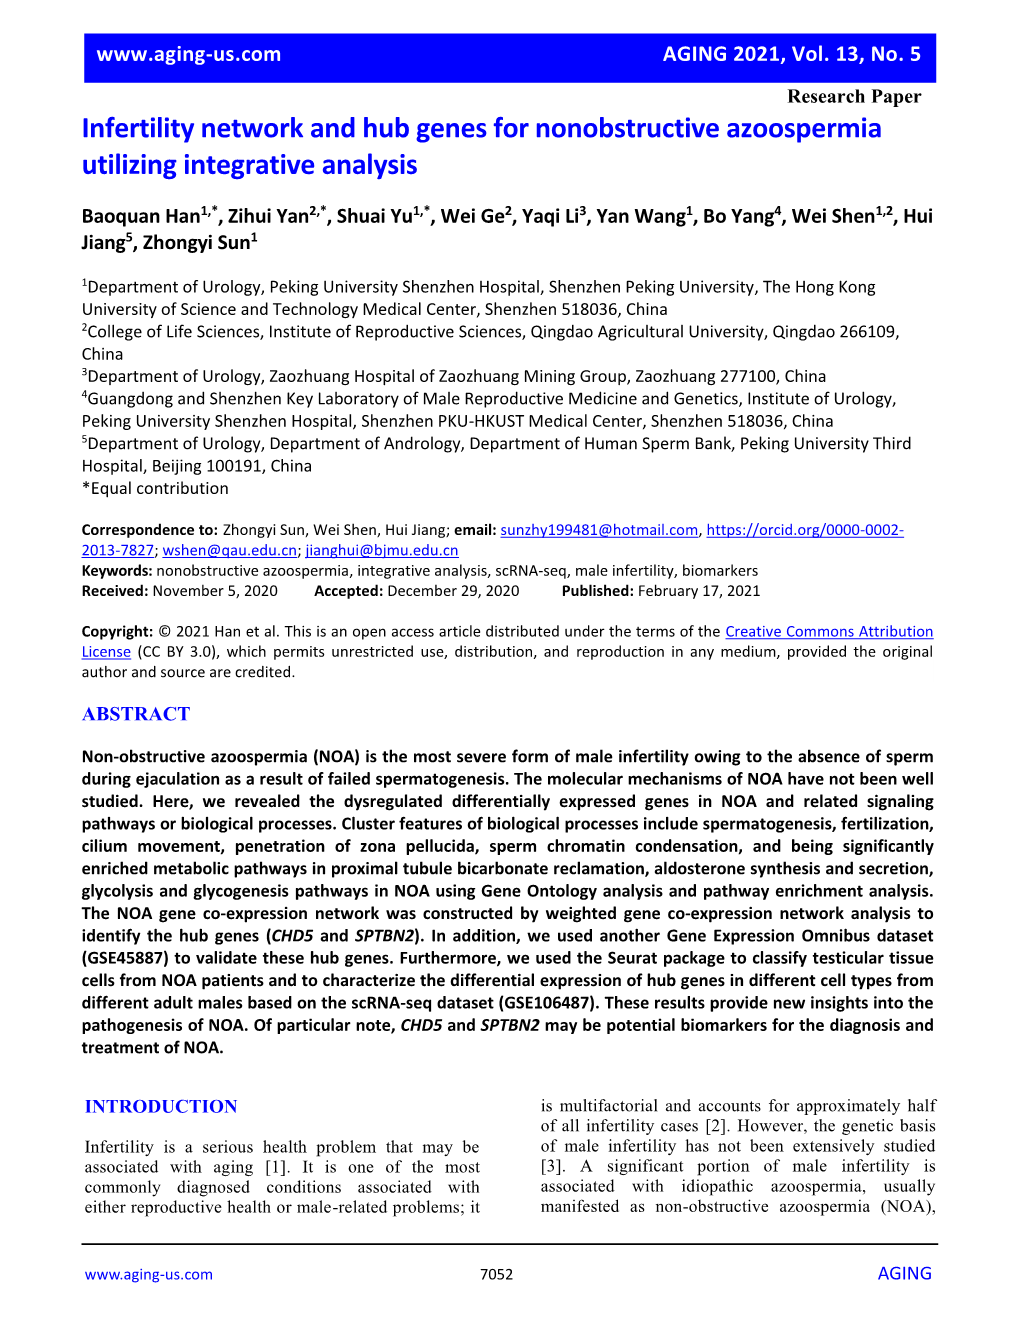 Infertility Network and Hub Genes for Nonobstructive Azoospermia Utilizing Integrative Analysis